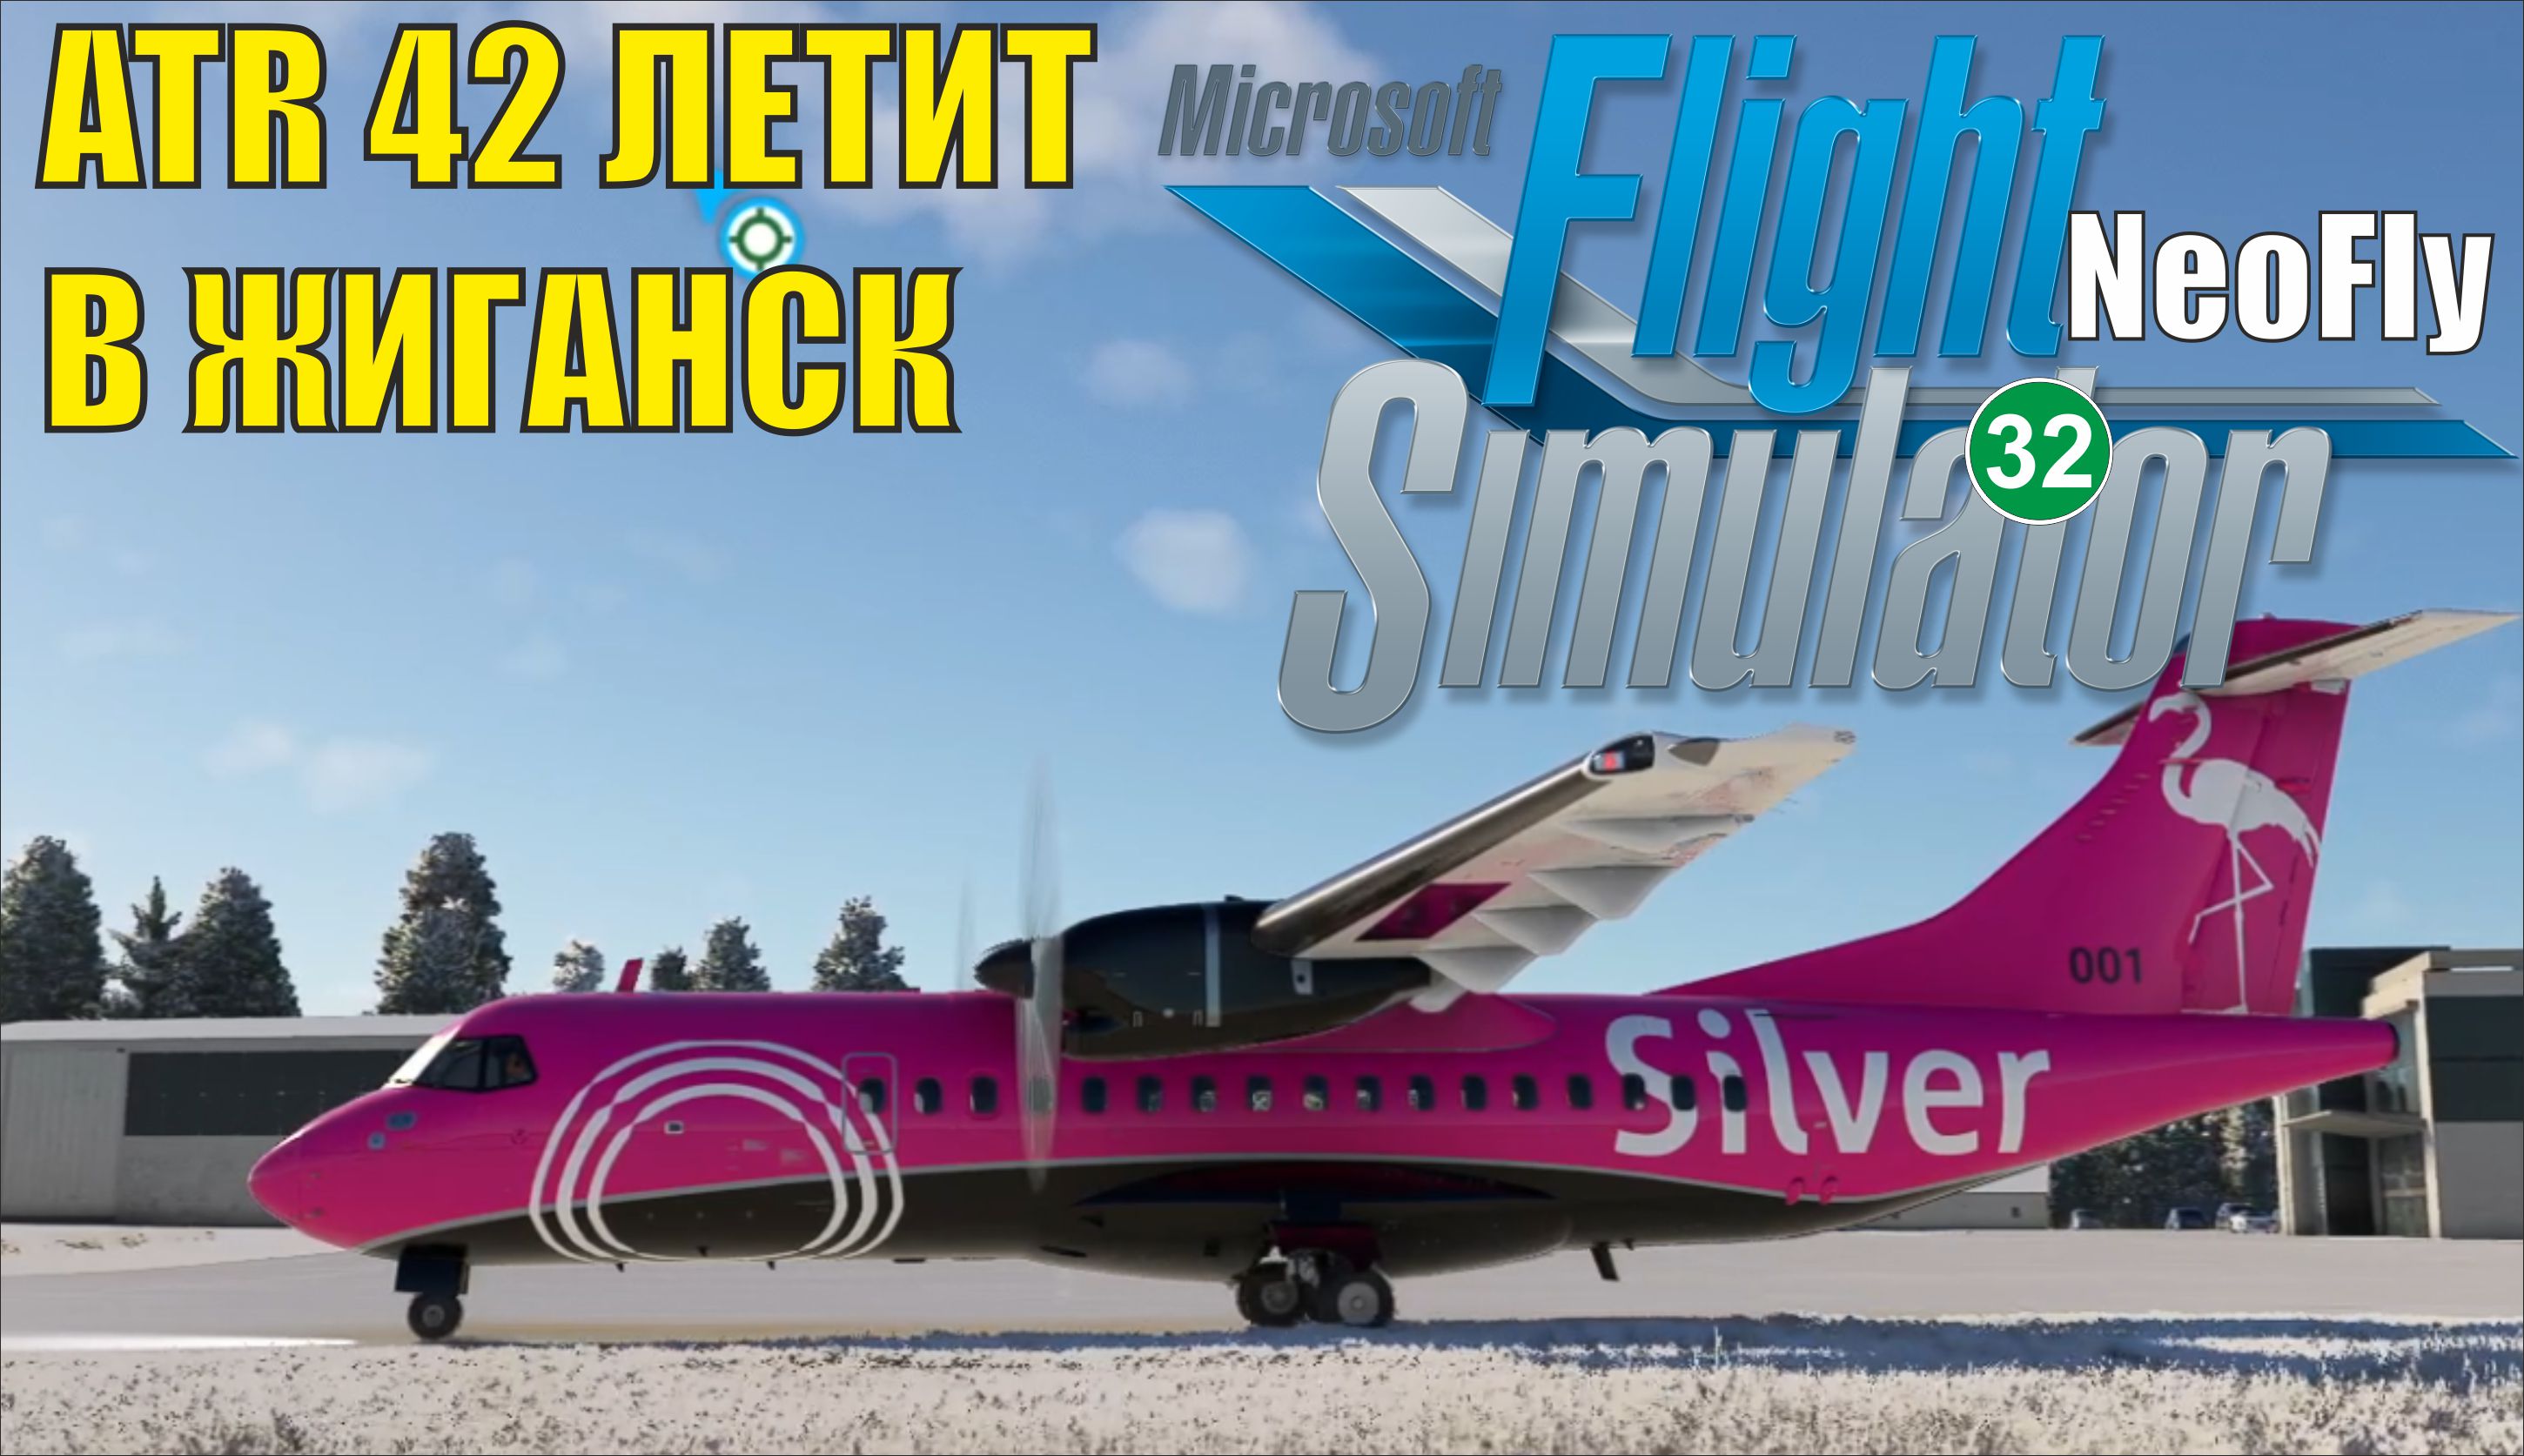 Microsoft Flight Simulator 2020 (NeoFly) - ATR 42 летит в Жиганск